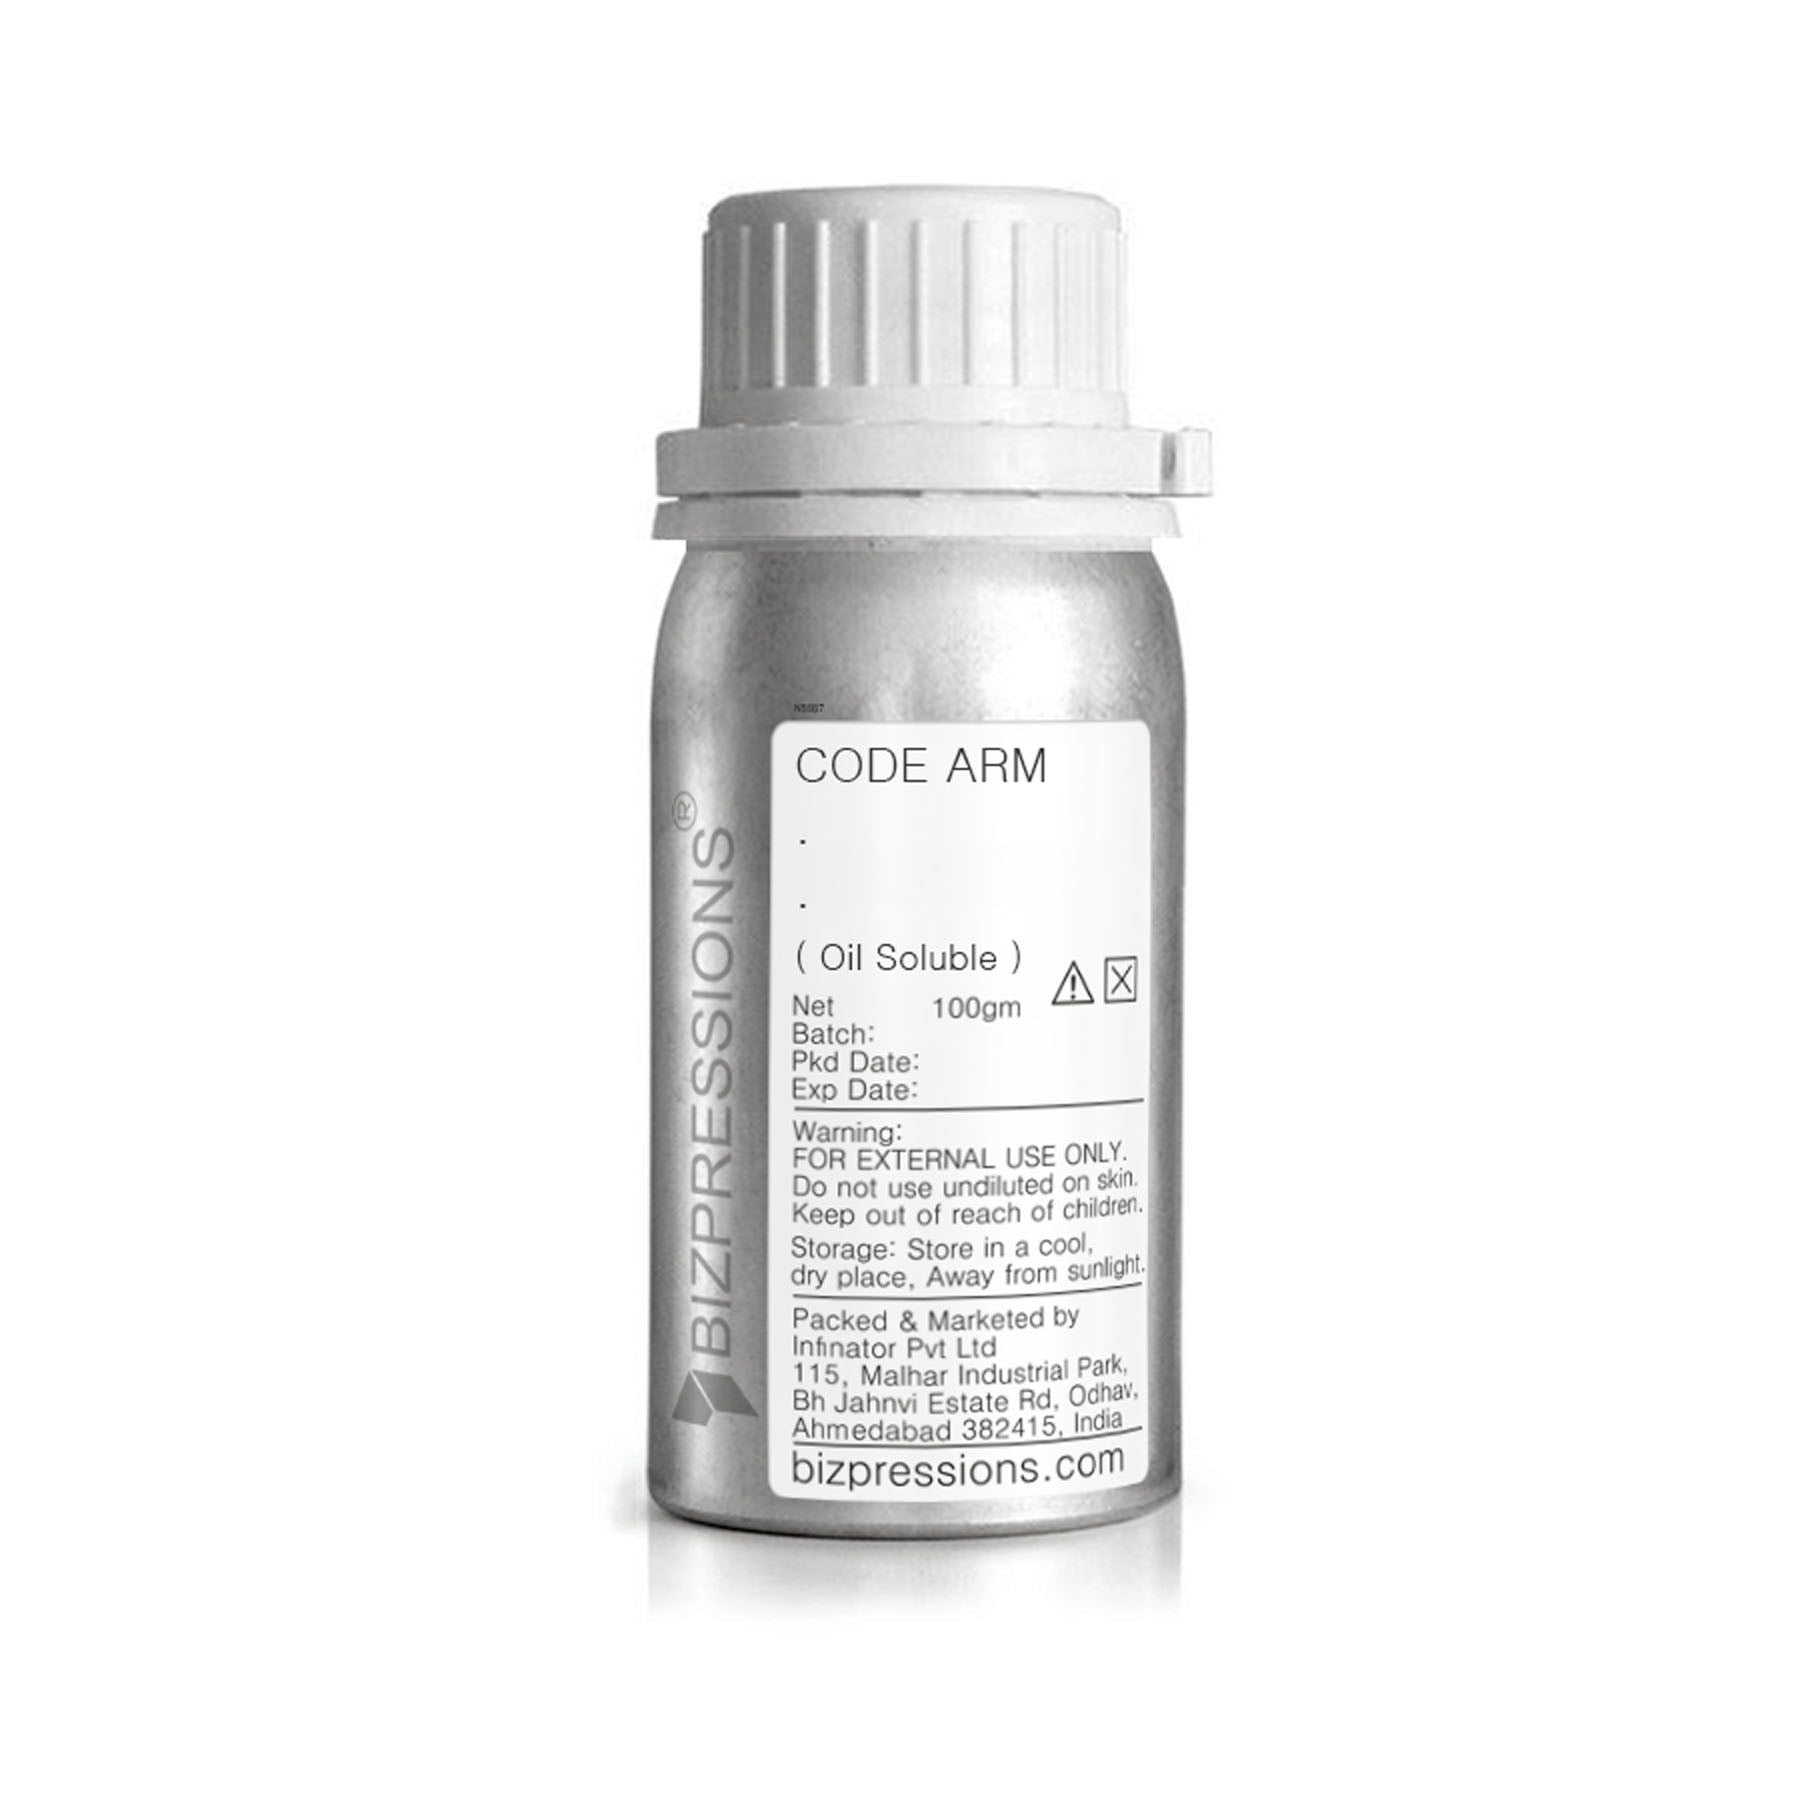 CODE ARM - Fragrance ( Oil Soluble ) - 100 gm